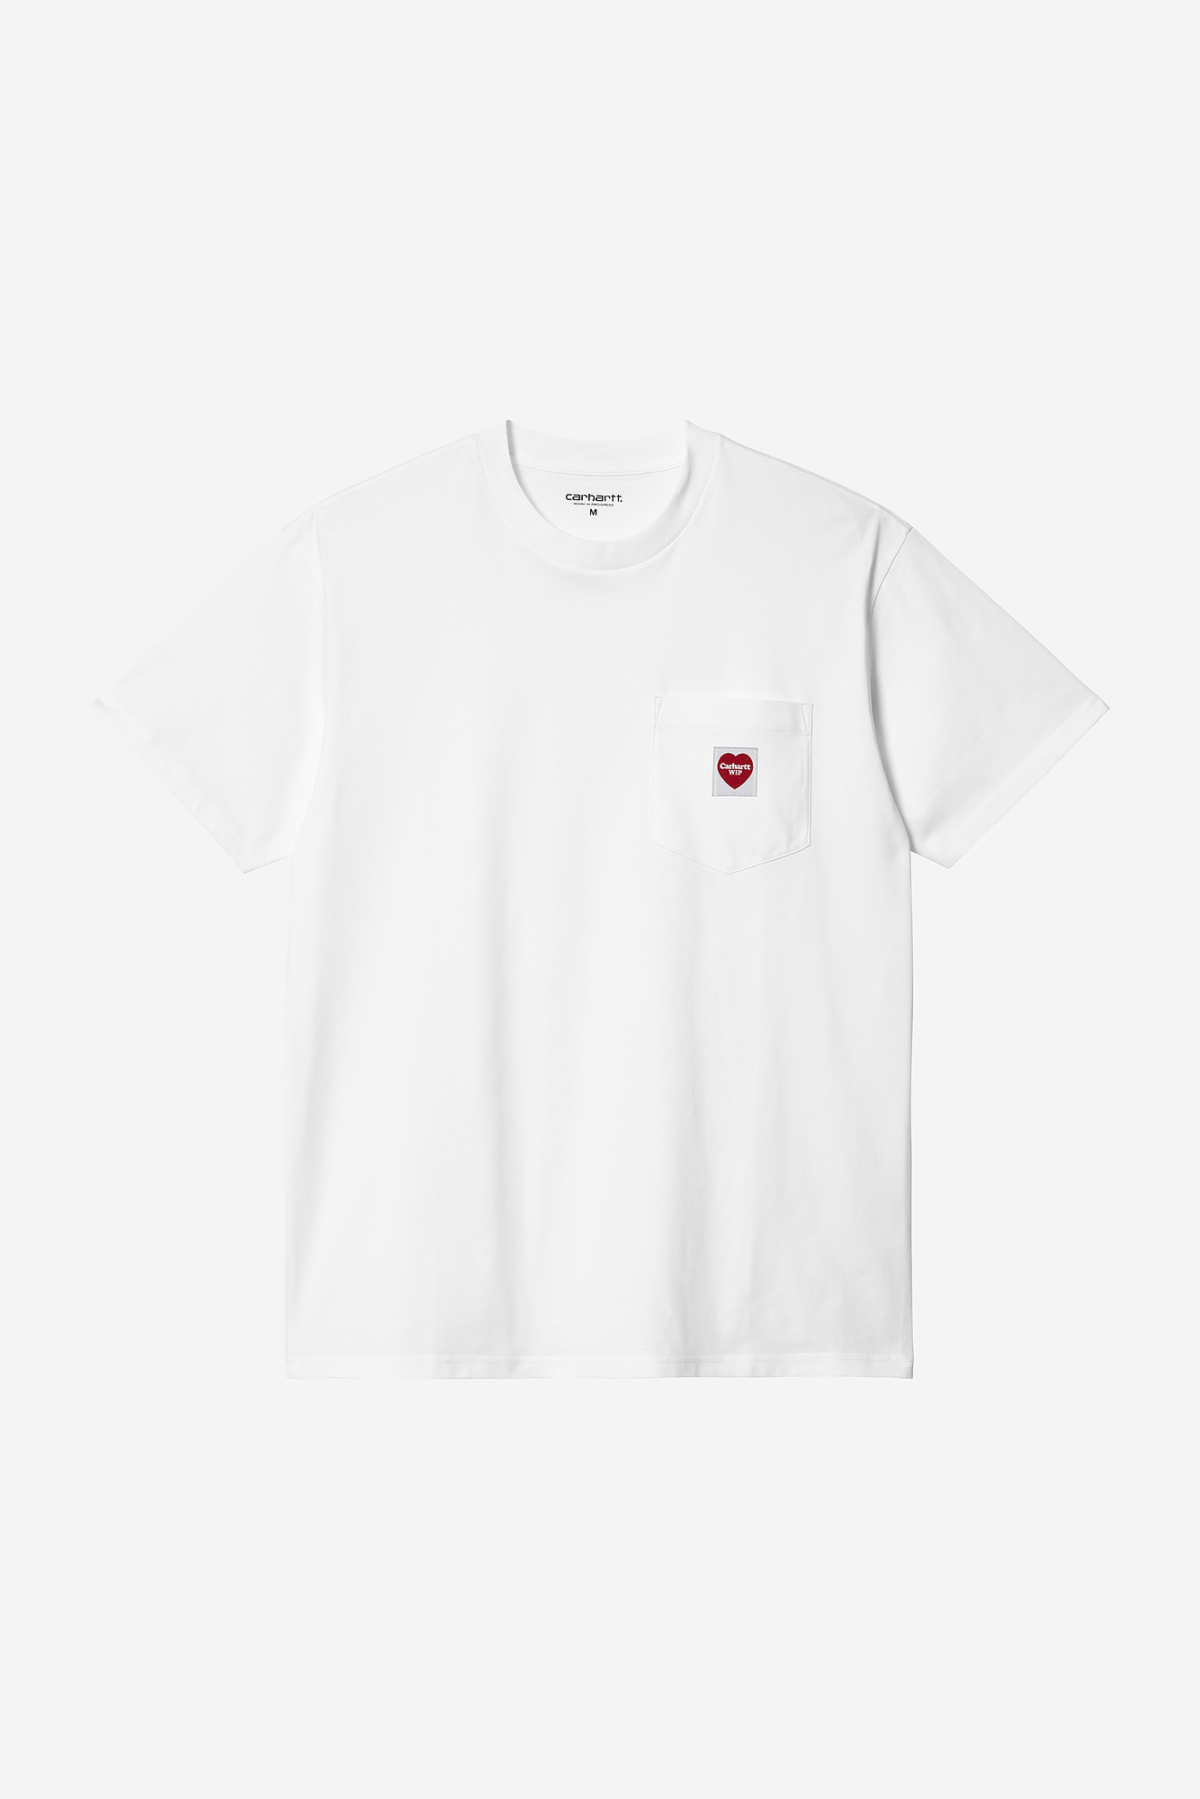 Camiseta Carhartt WIP Pocket Heart T-Shirt - Comprar Online